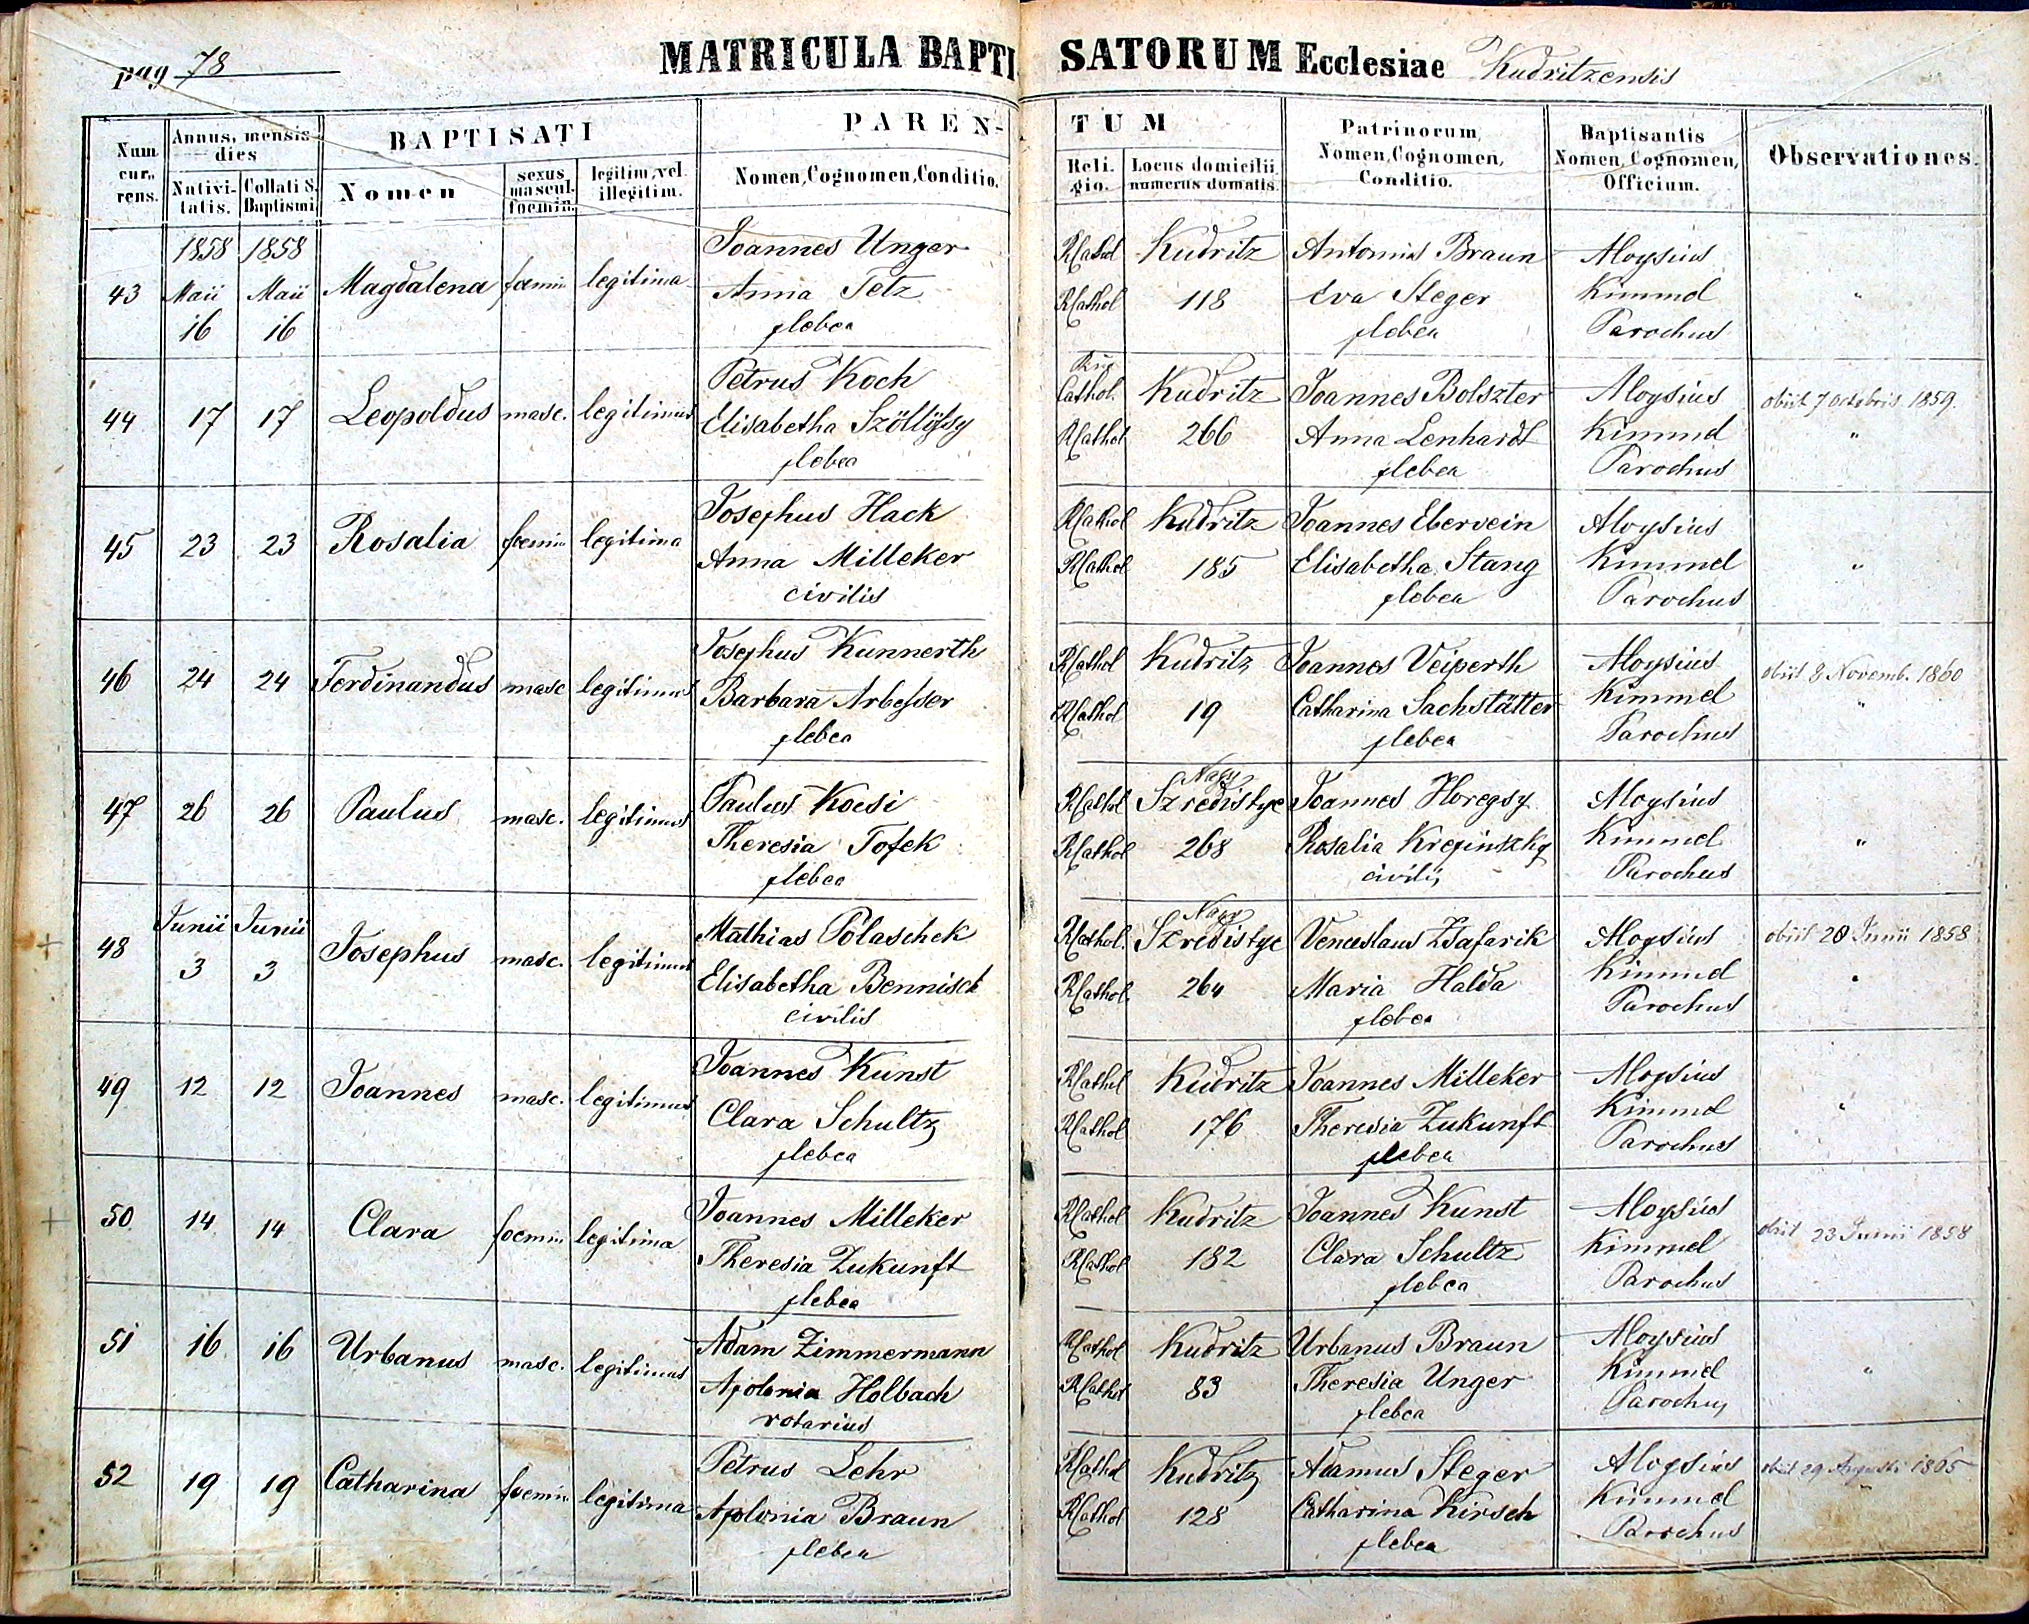 images/church_records/BIRTHS/1852-1870B/078